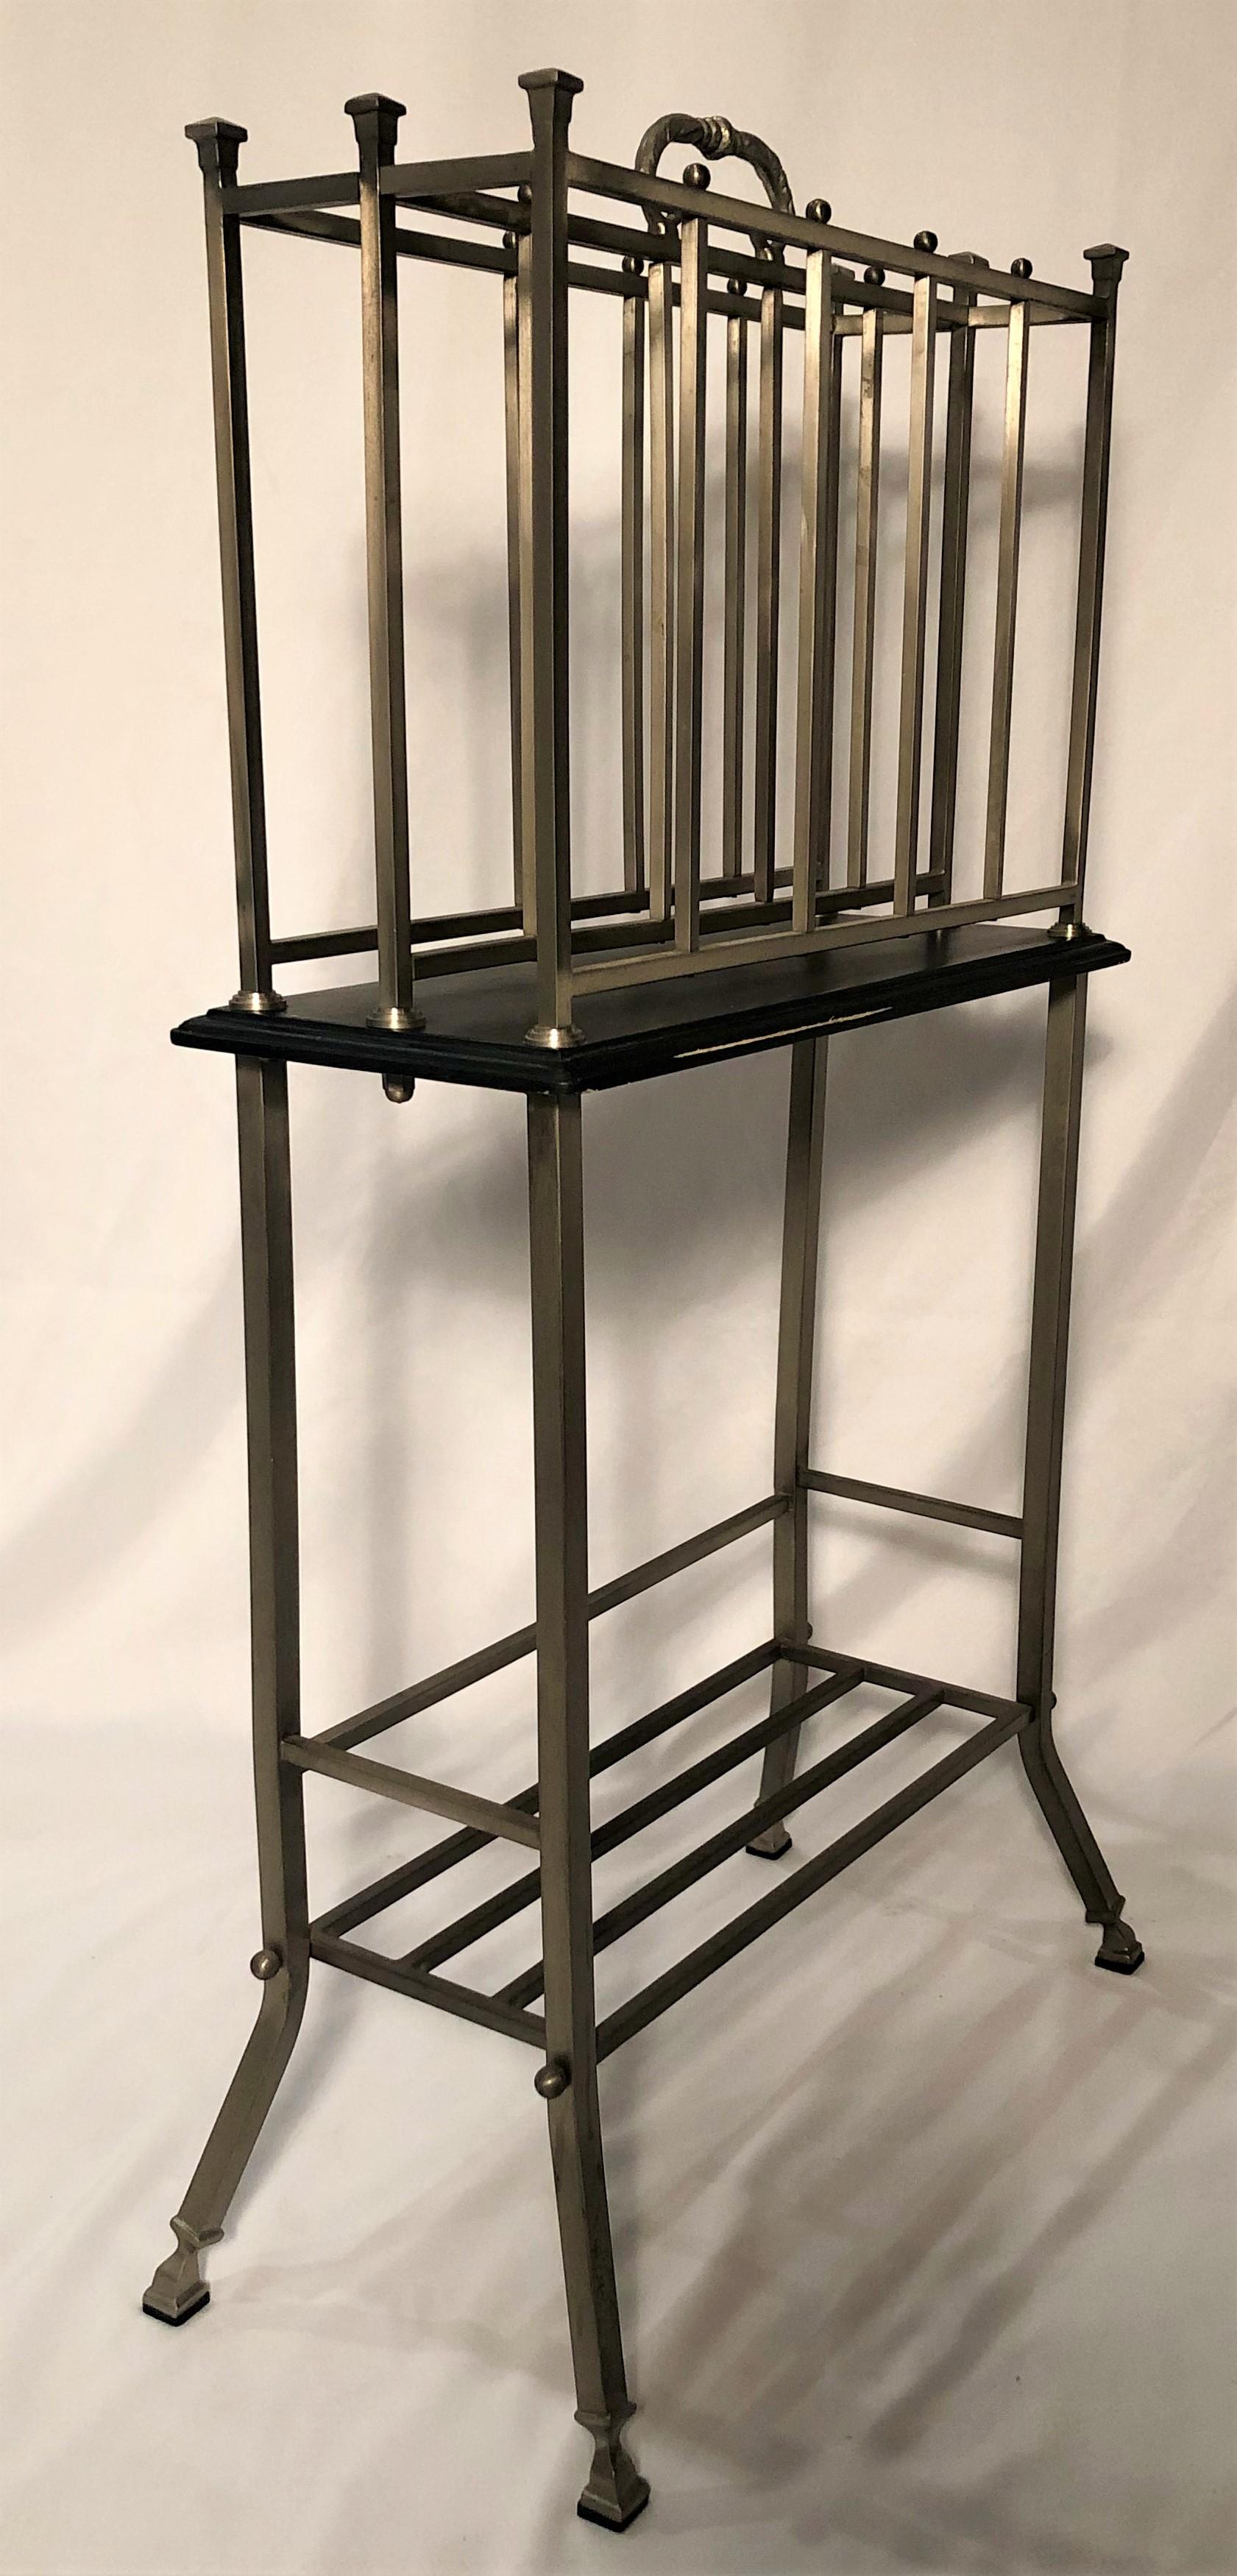 Hand-made steel standing magazine rack.